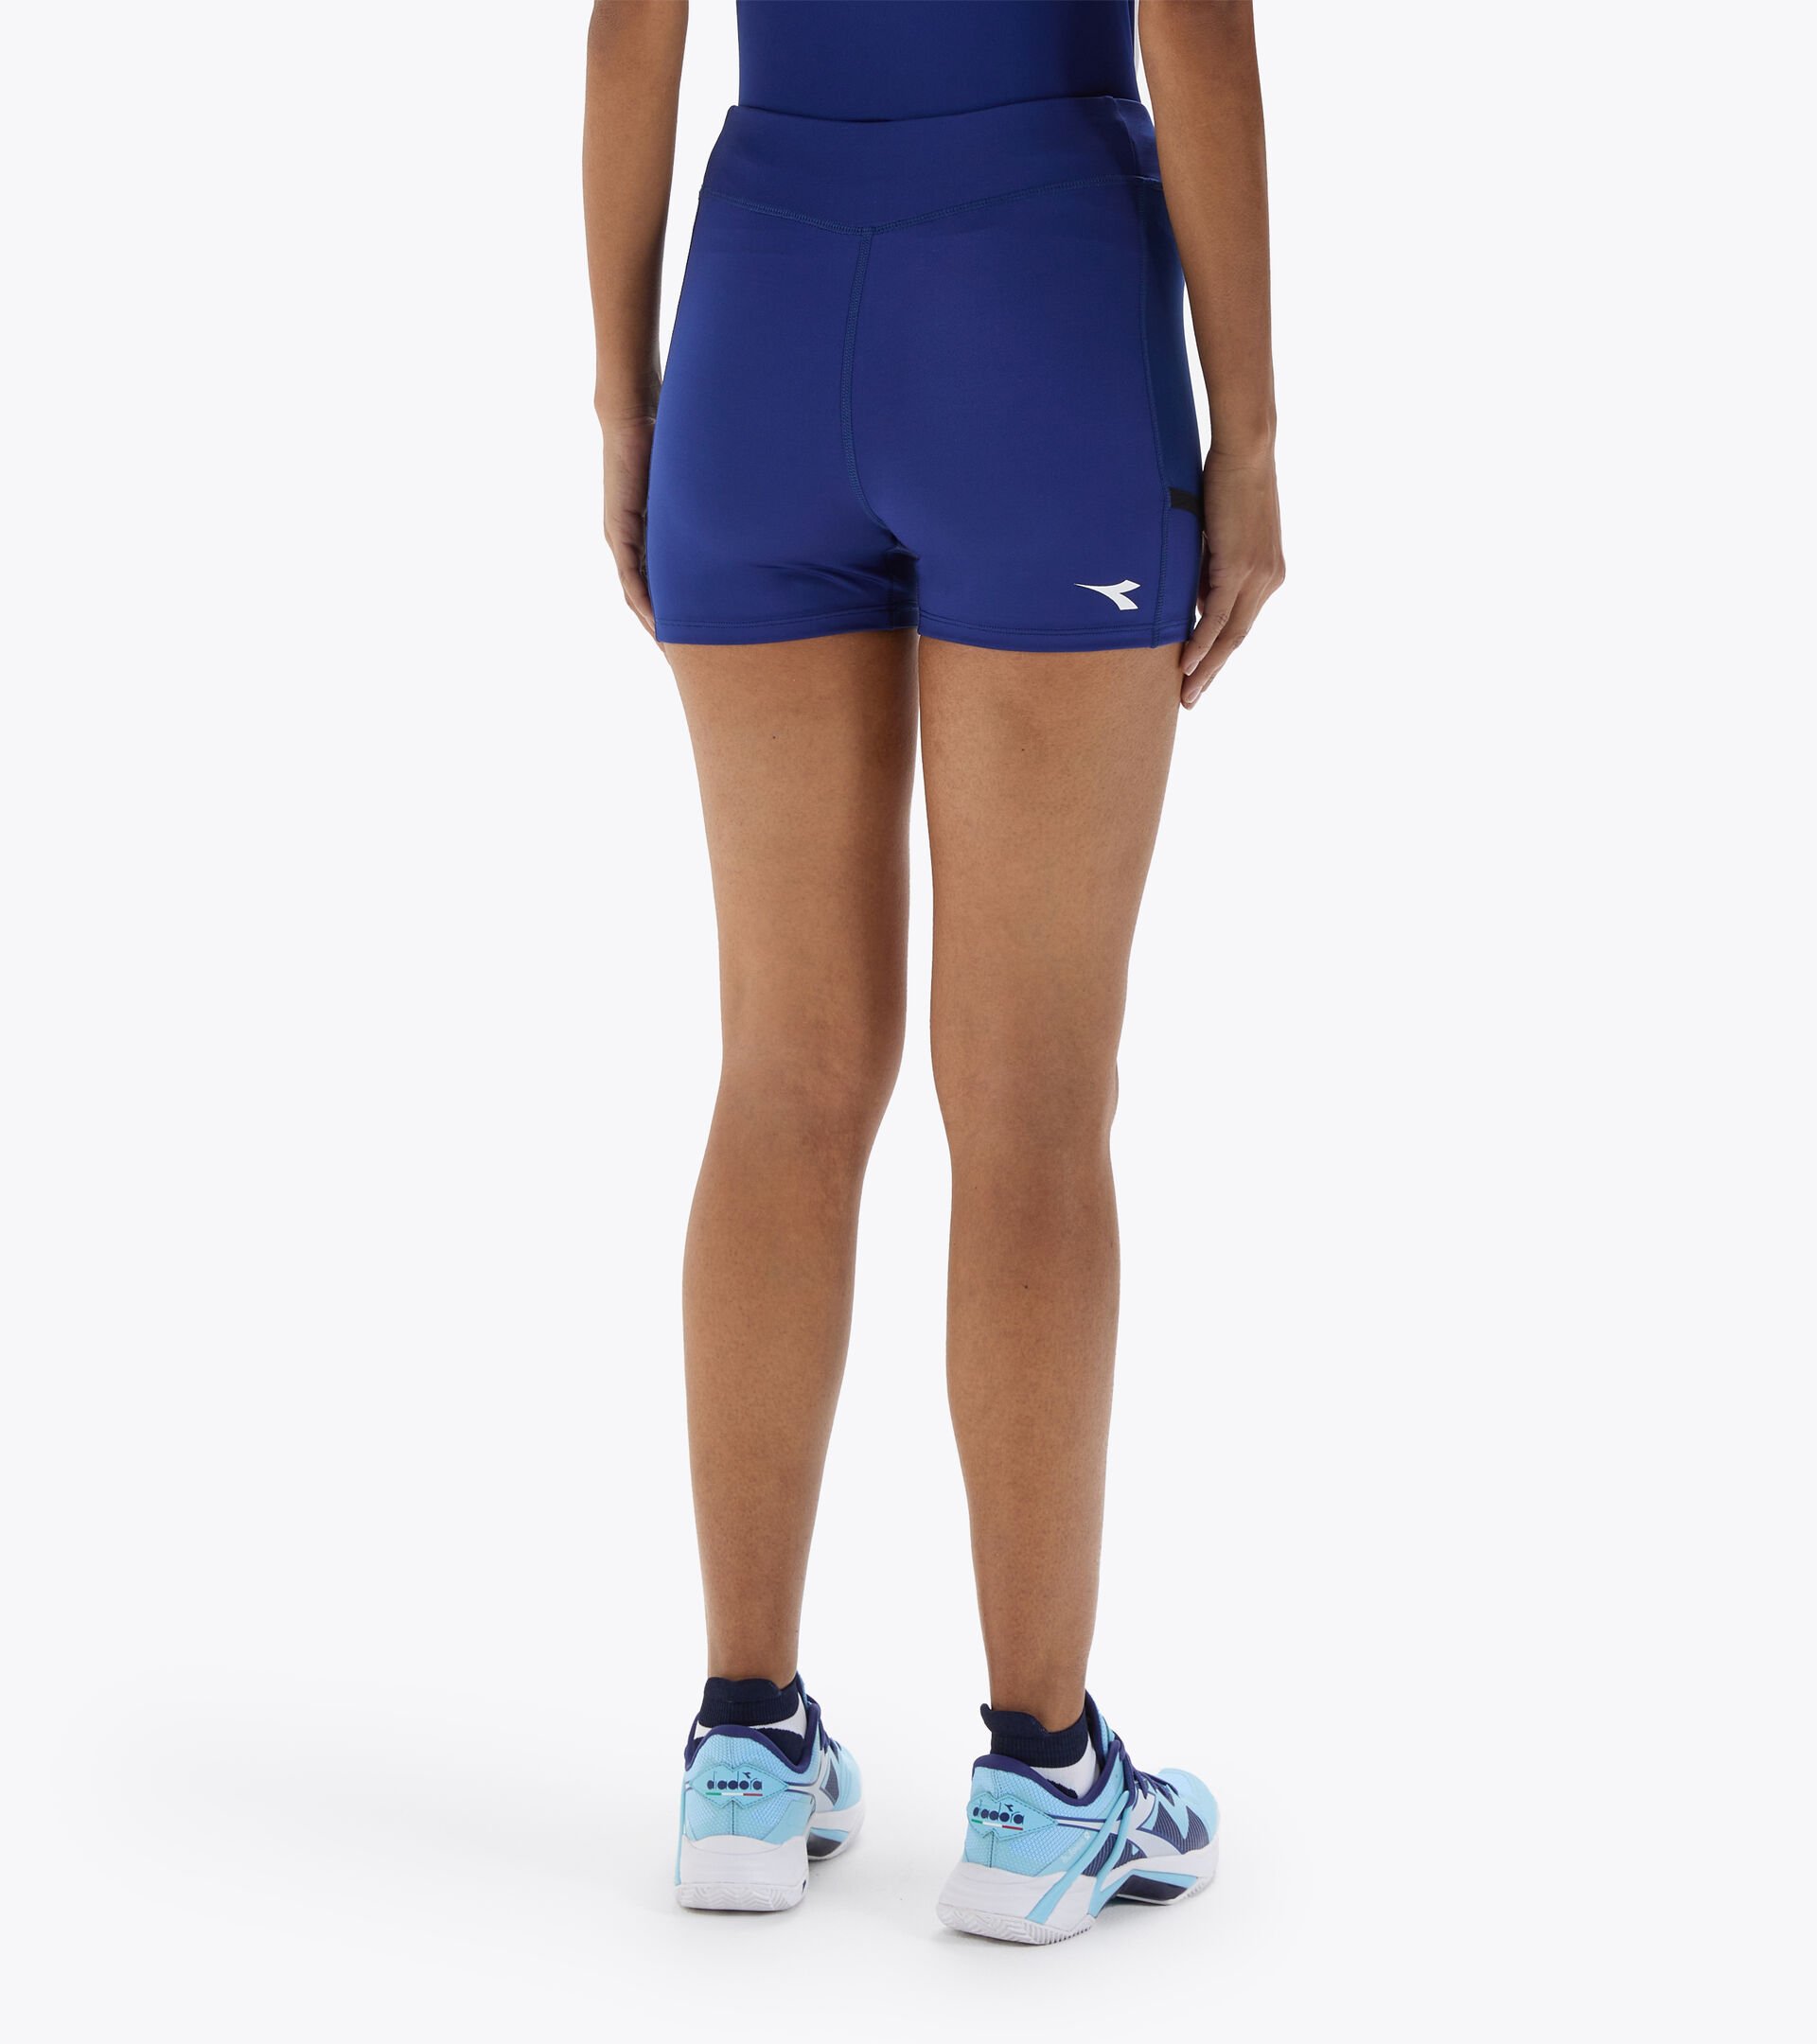 Tennis-Shorts - Damen L. SHORT TIGHTS POCKET BLAUDRUCK - Diadora